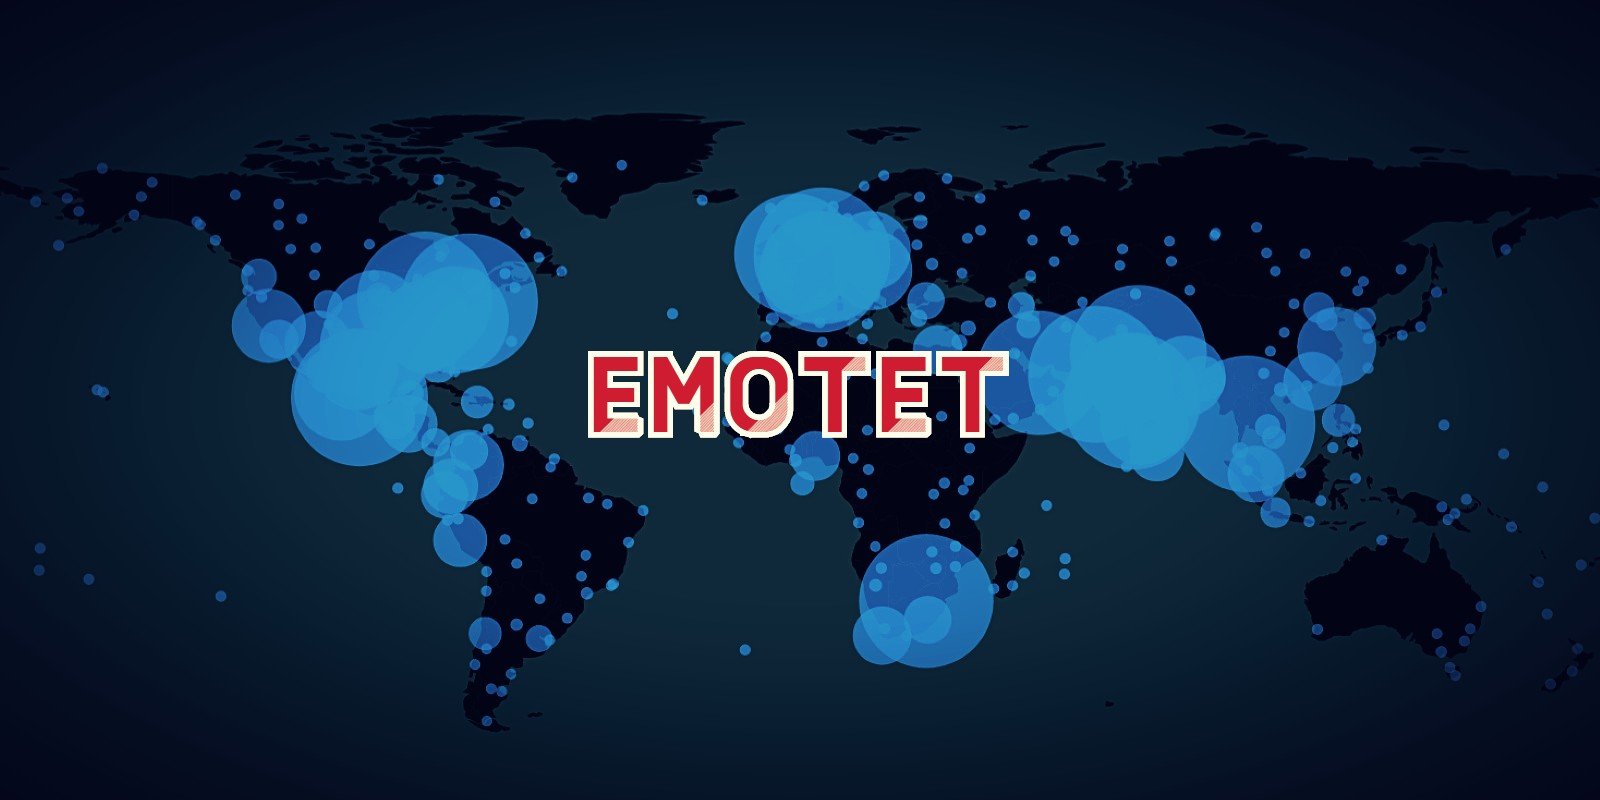 Emotet botnet starts blasting malware again after 5 month break